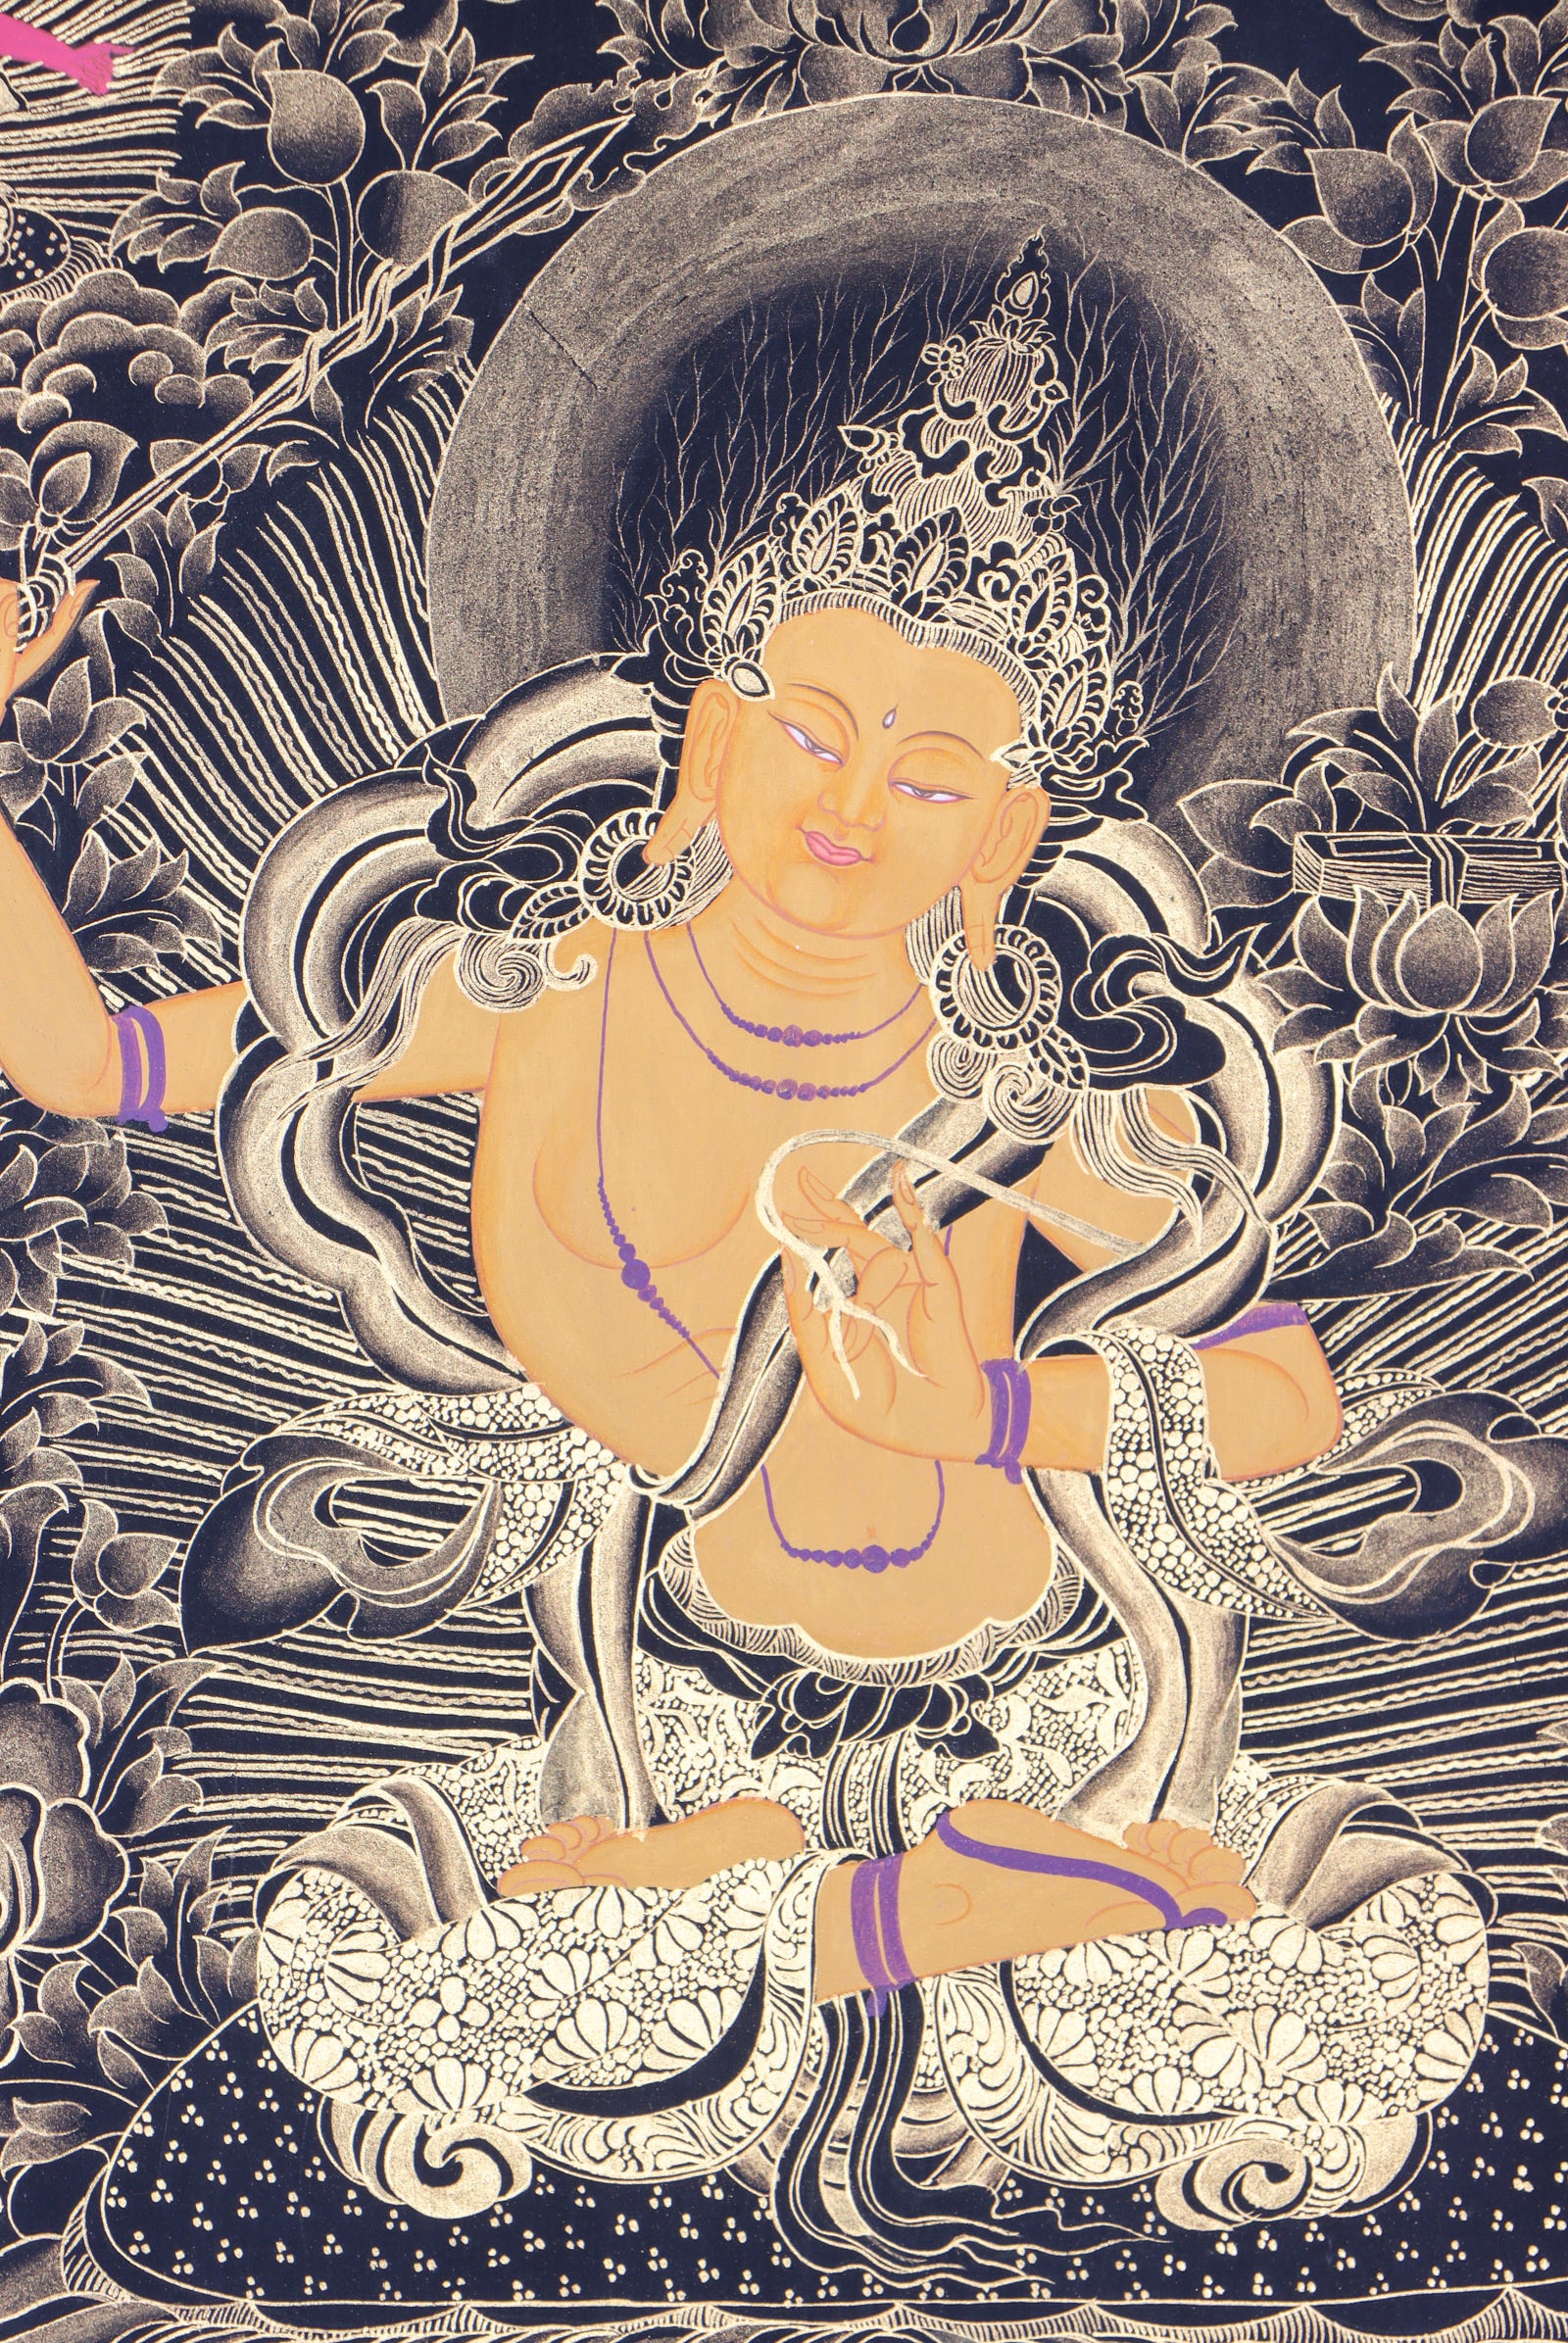 Manjushri Thangka Painting serves as visual aid for meditation.